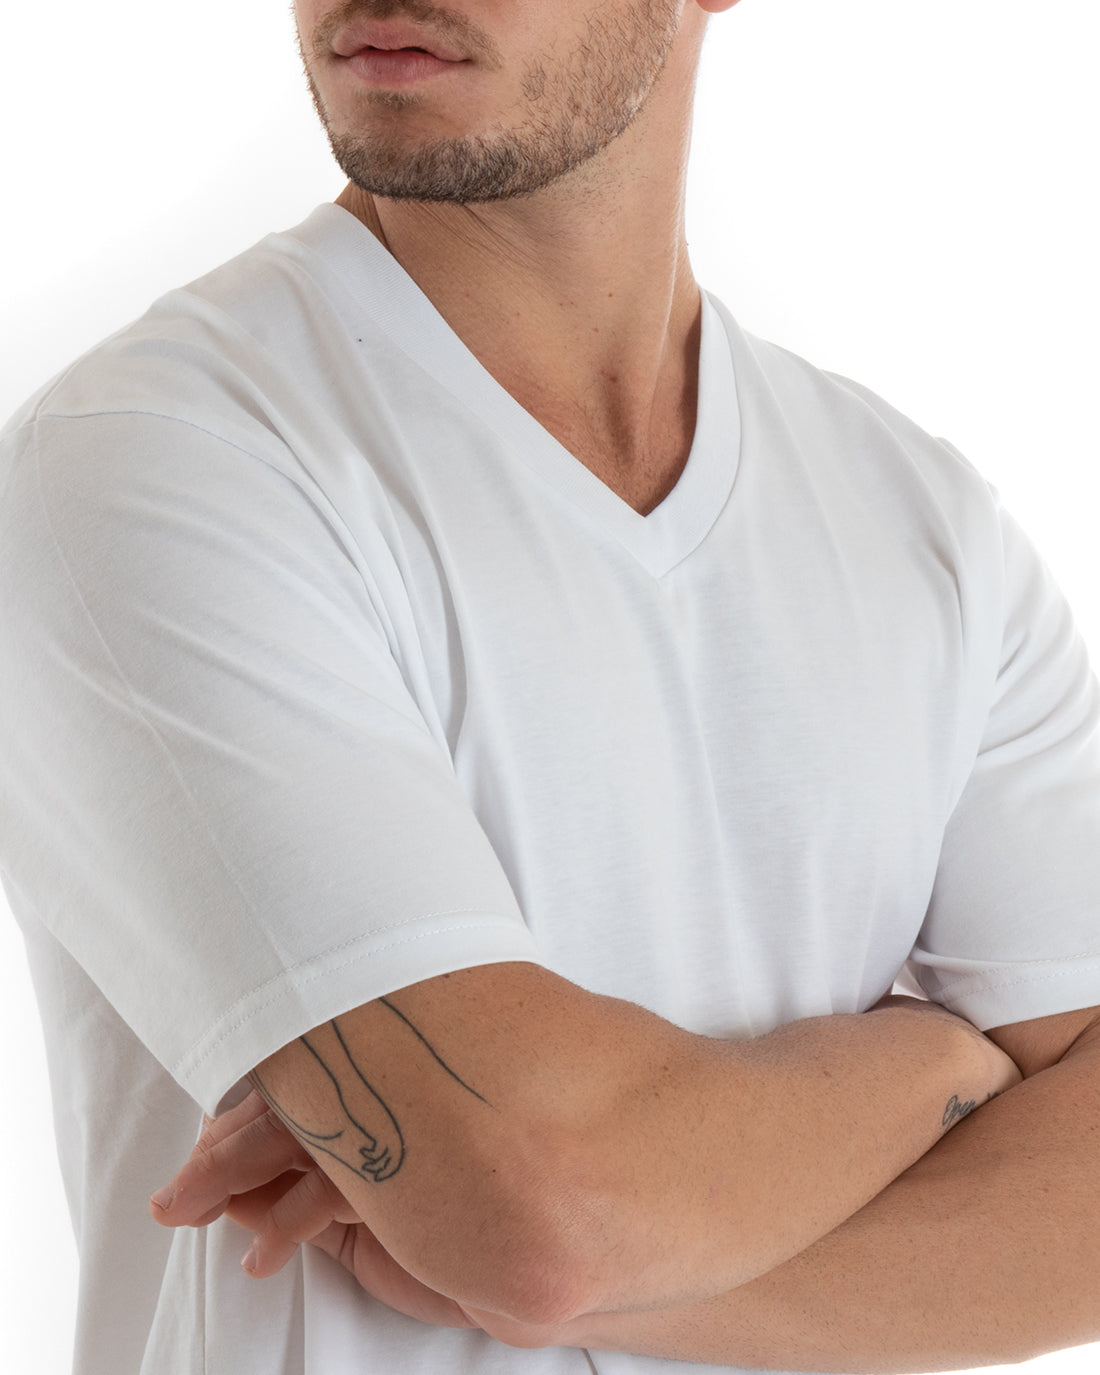 Men's T-shirt Plain White Oversize V-Neck Basic Casual Shirt GIOSAL-TS2884A